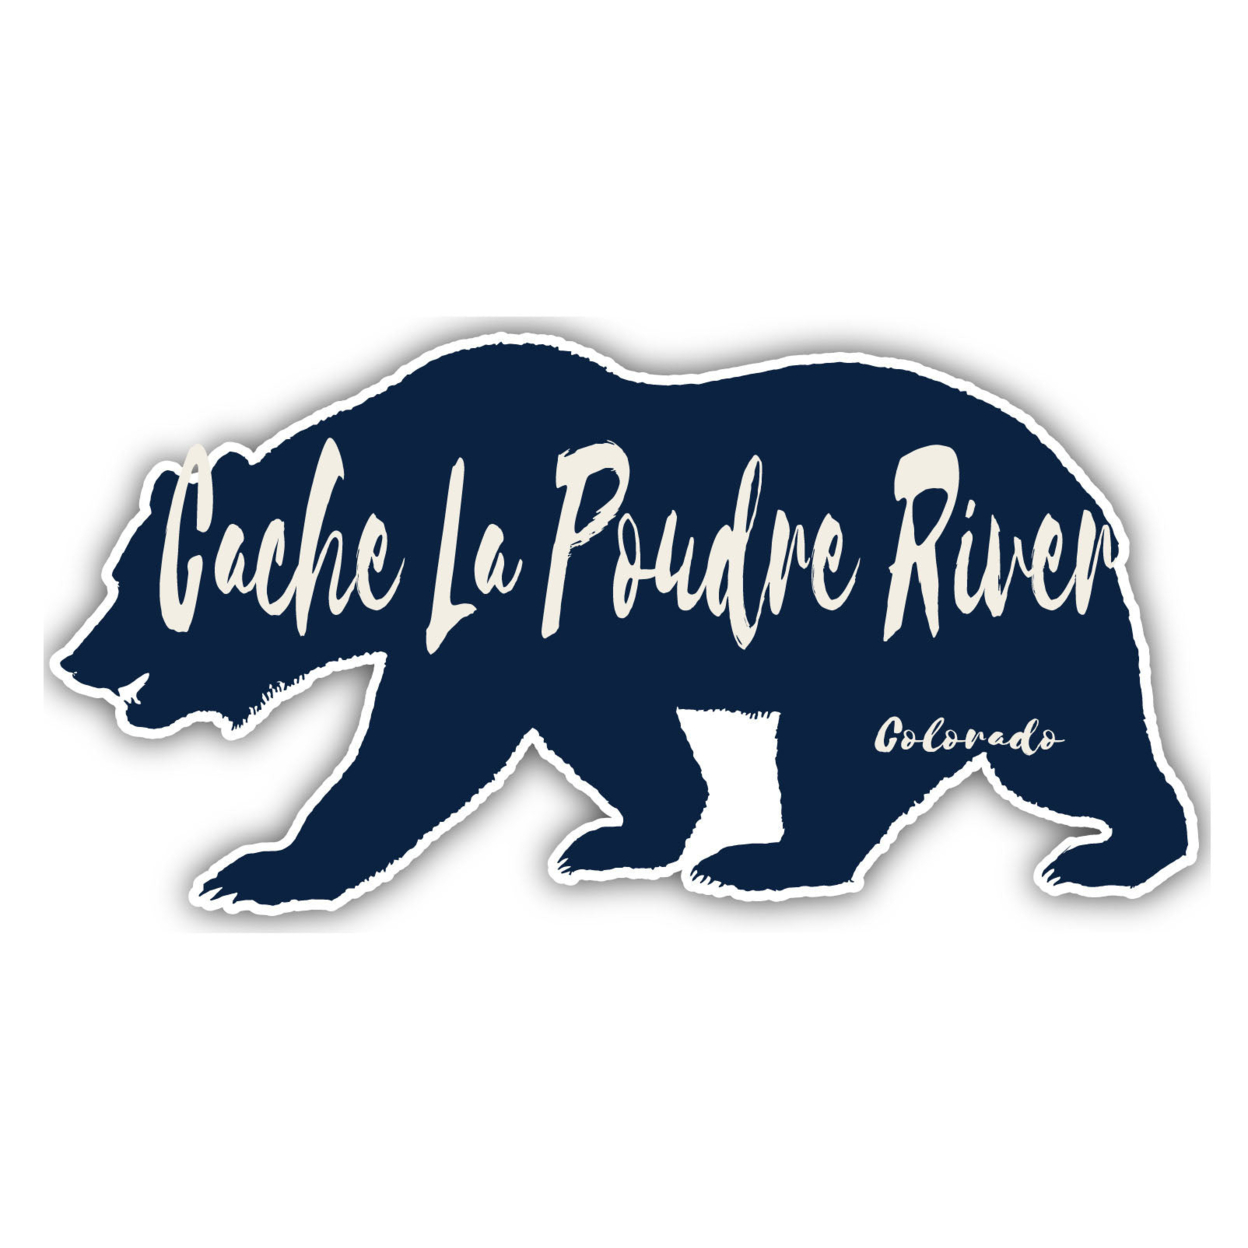 Cache La Poudre River Colorado Souvenir Decorative Stickers (Choose Theme And Size) - 4-Pack, 4-Inch, Camp Life